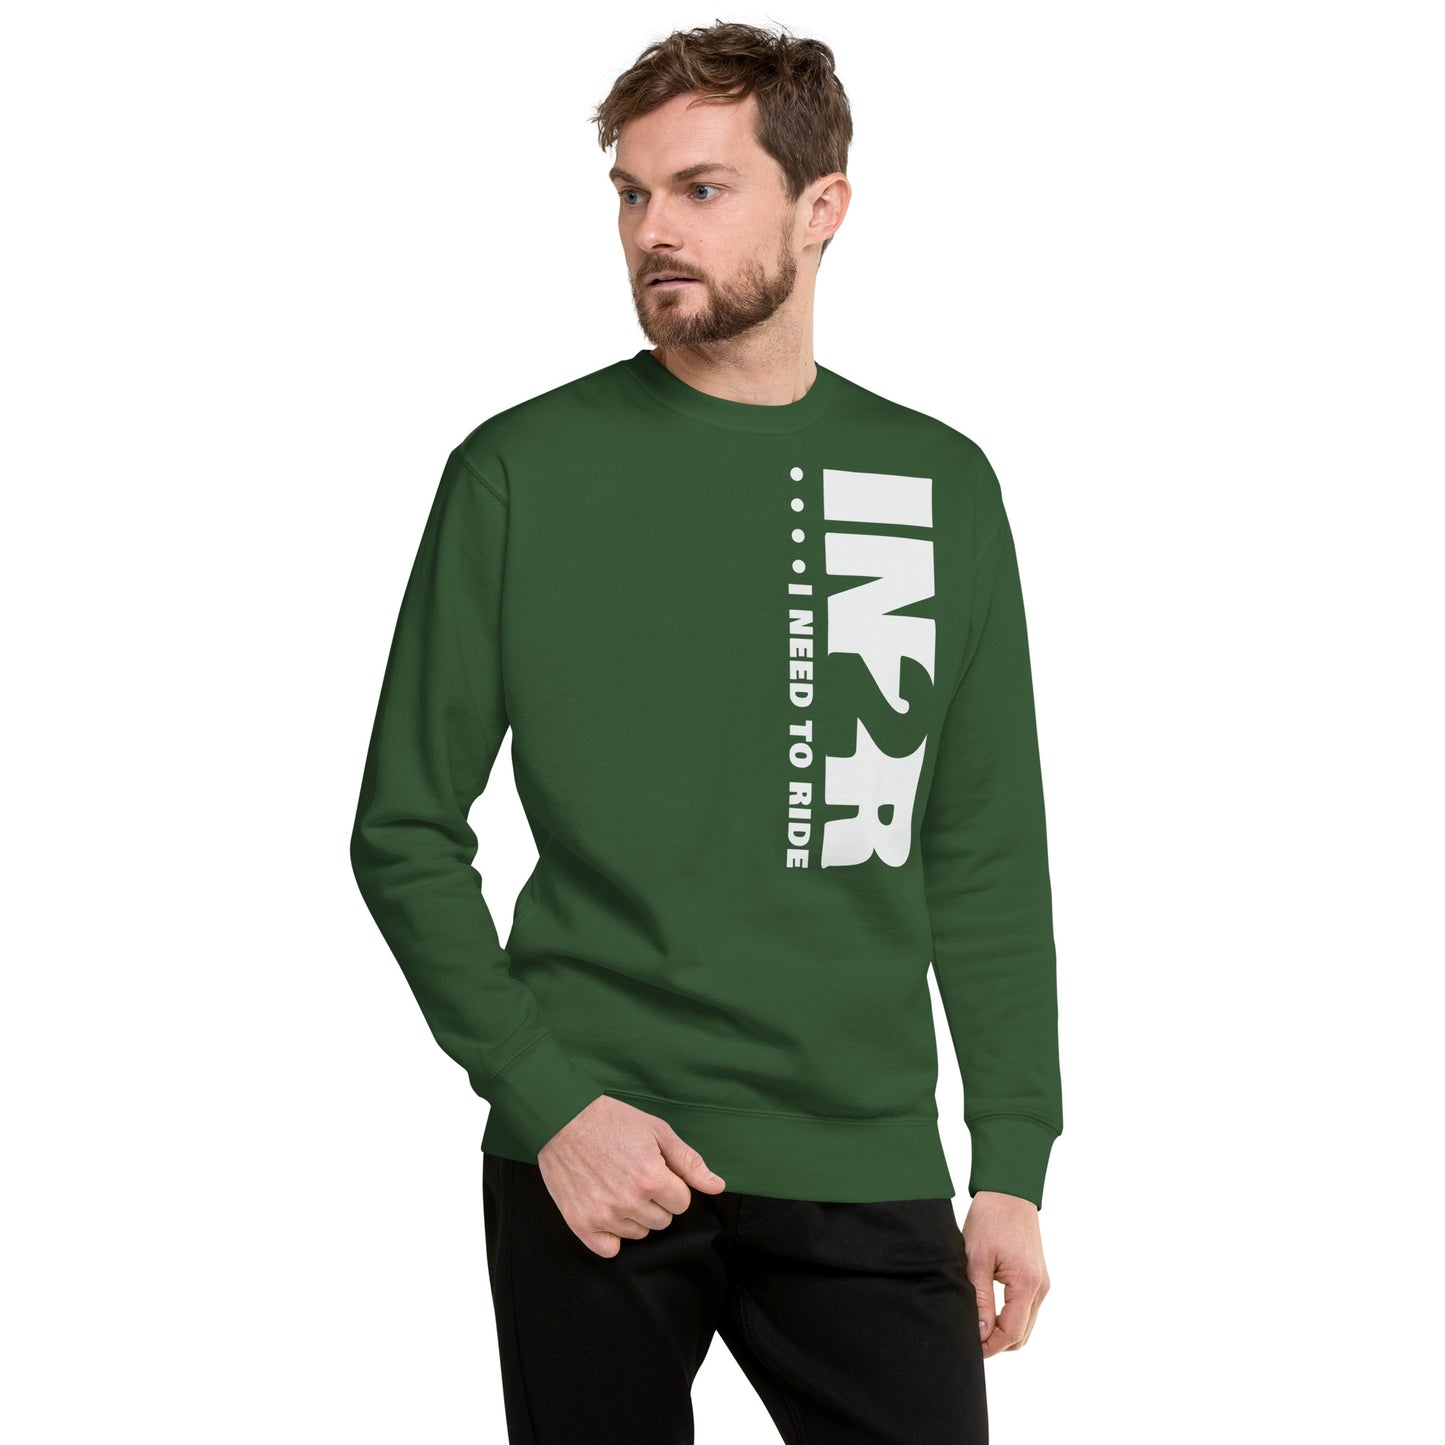 UrbanOriginal Sweatshirt | Unisex